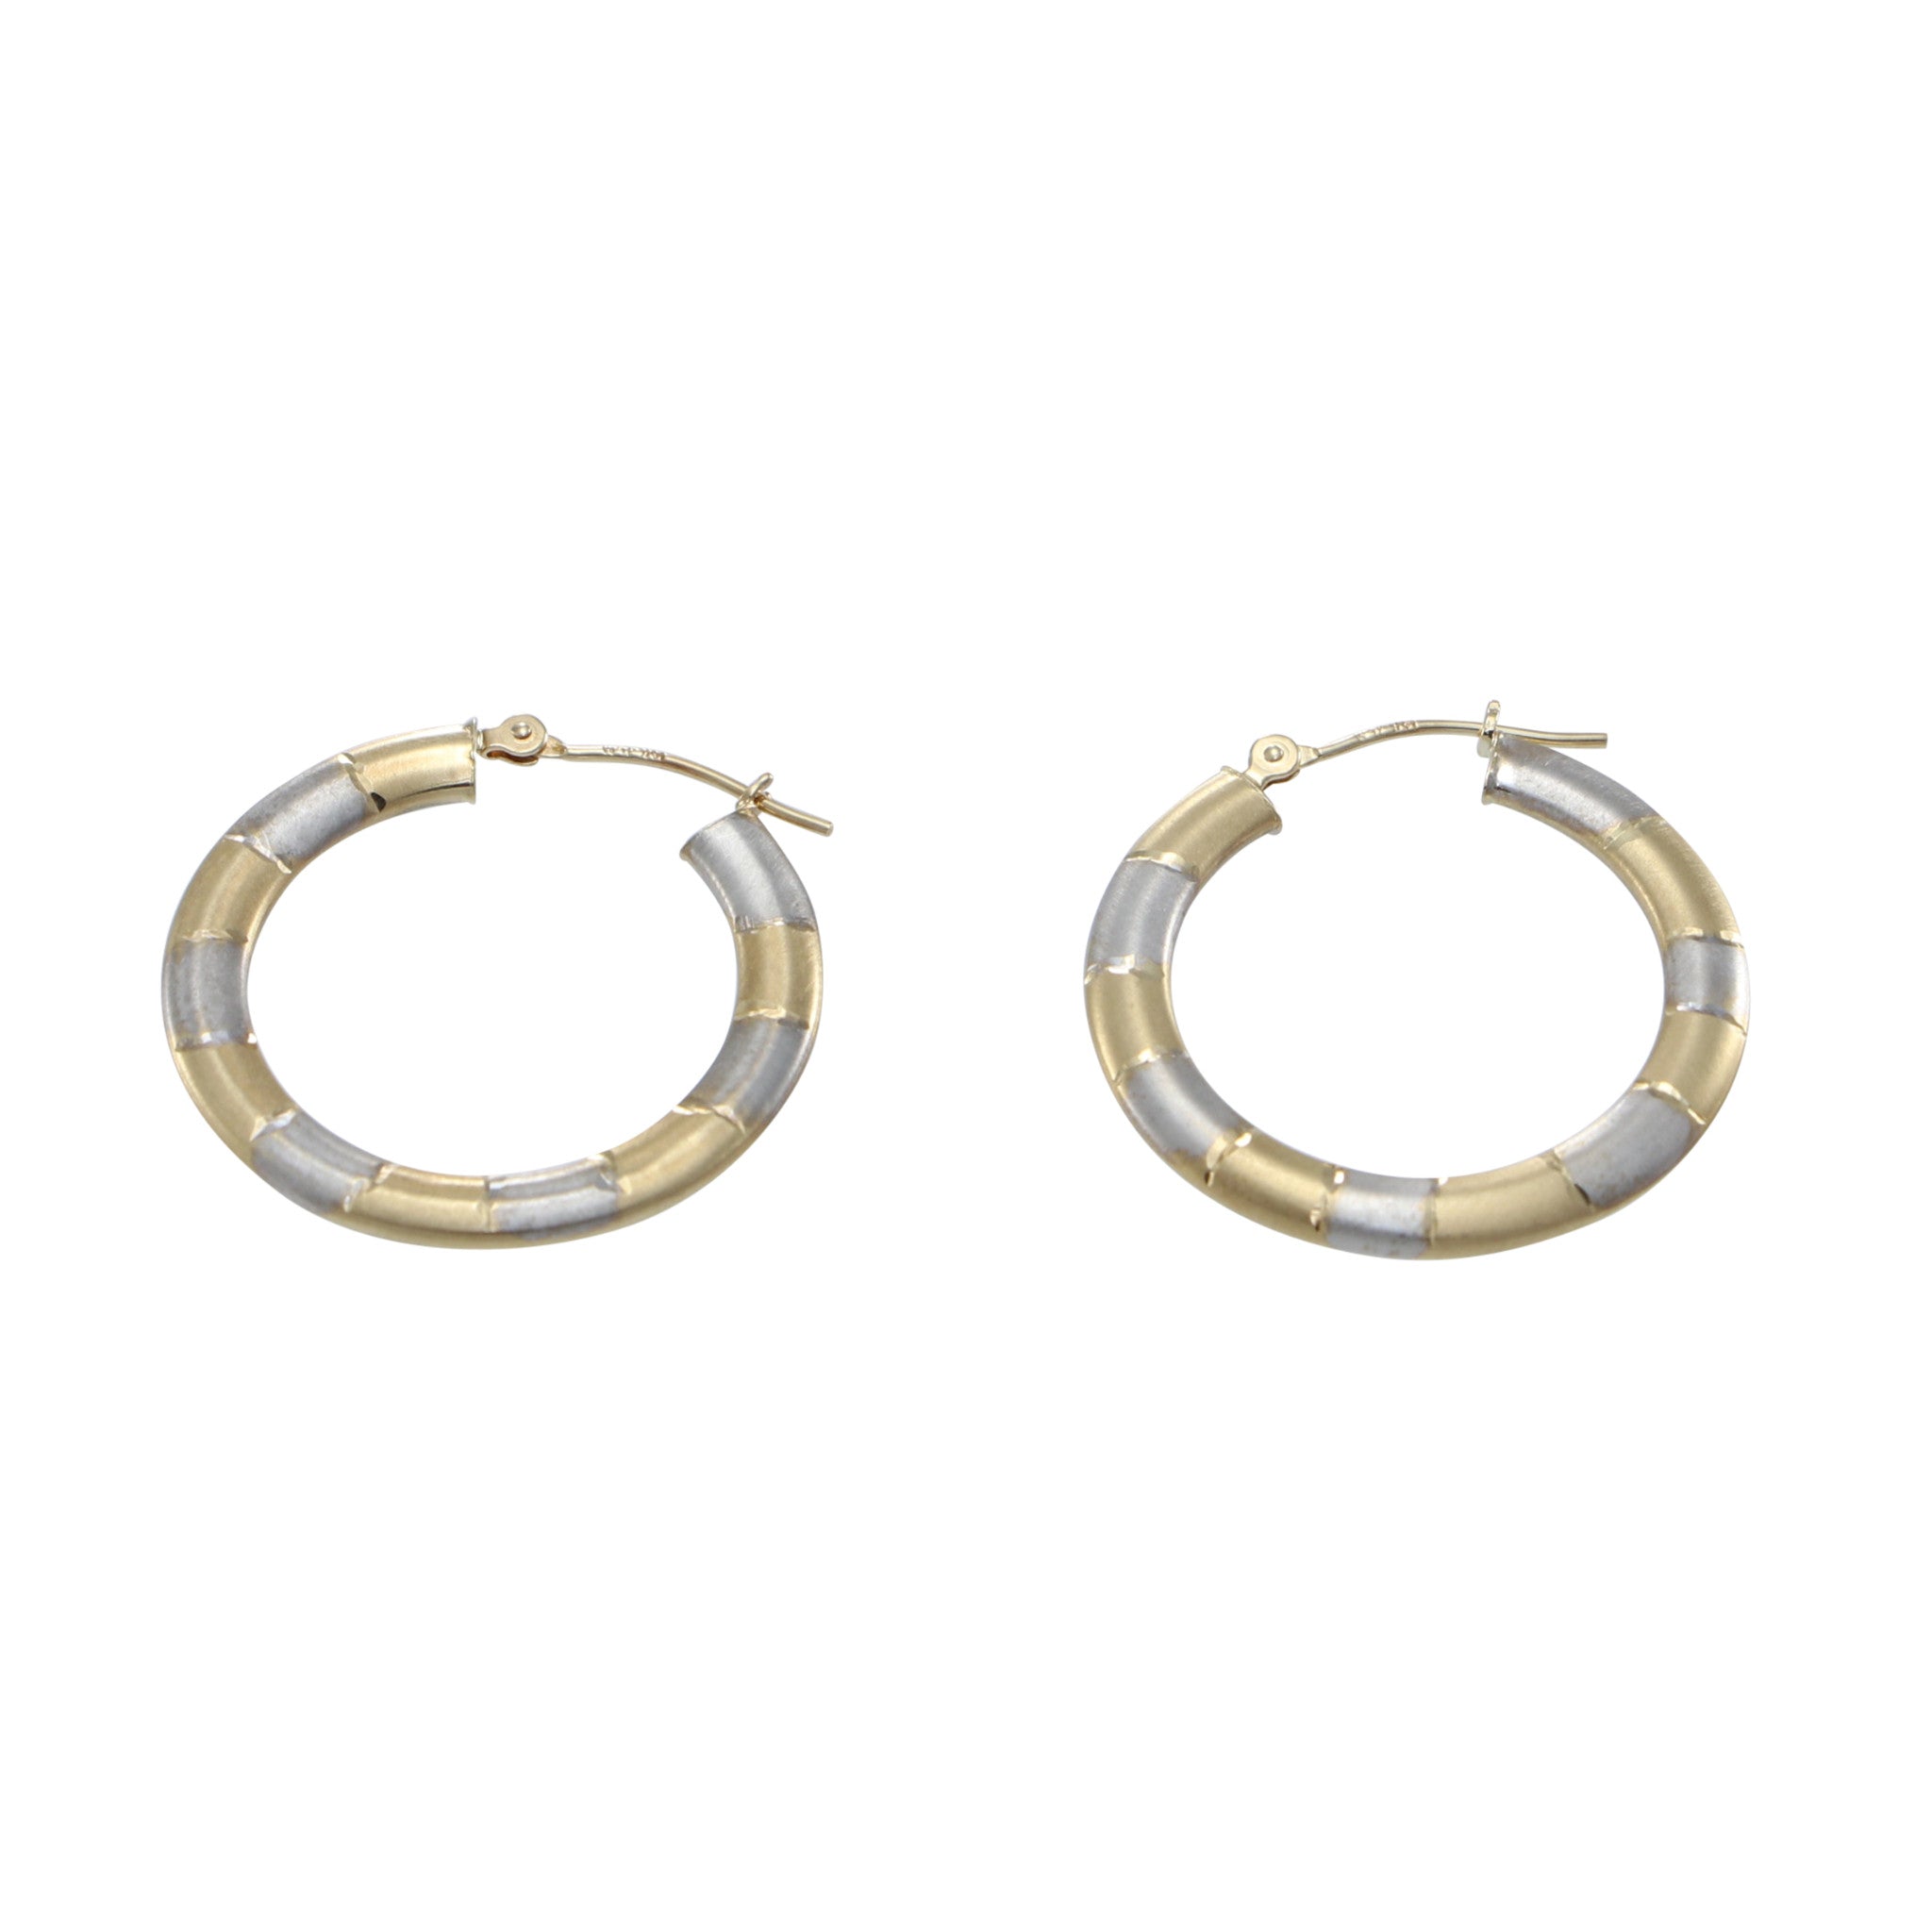 Medium Size Gold Hoop Earrings | eBay